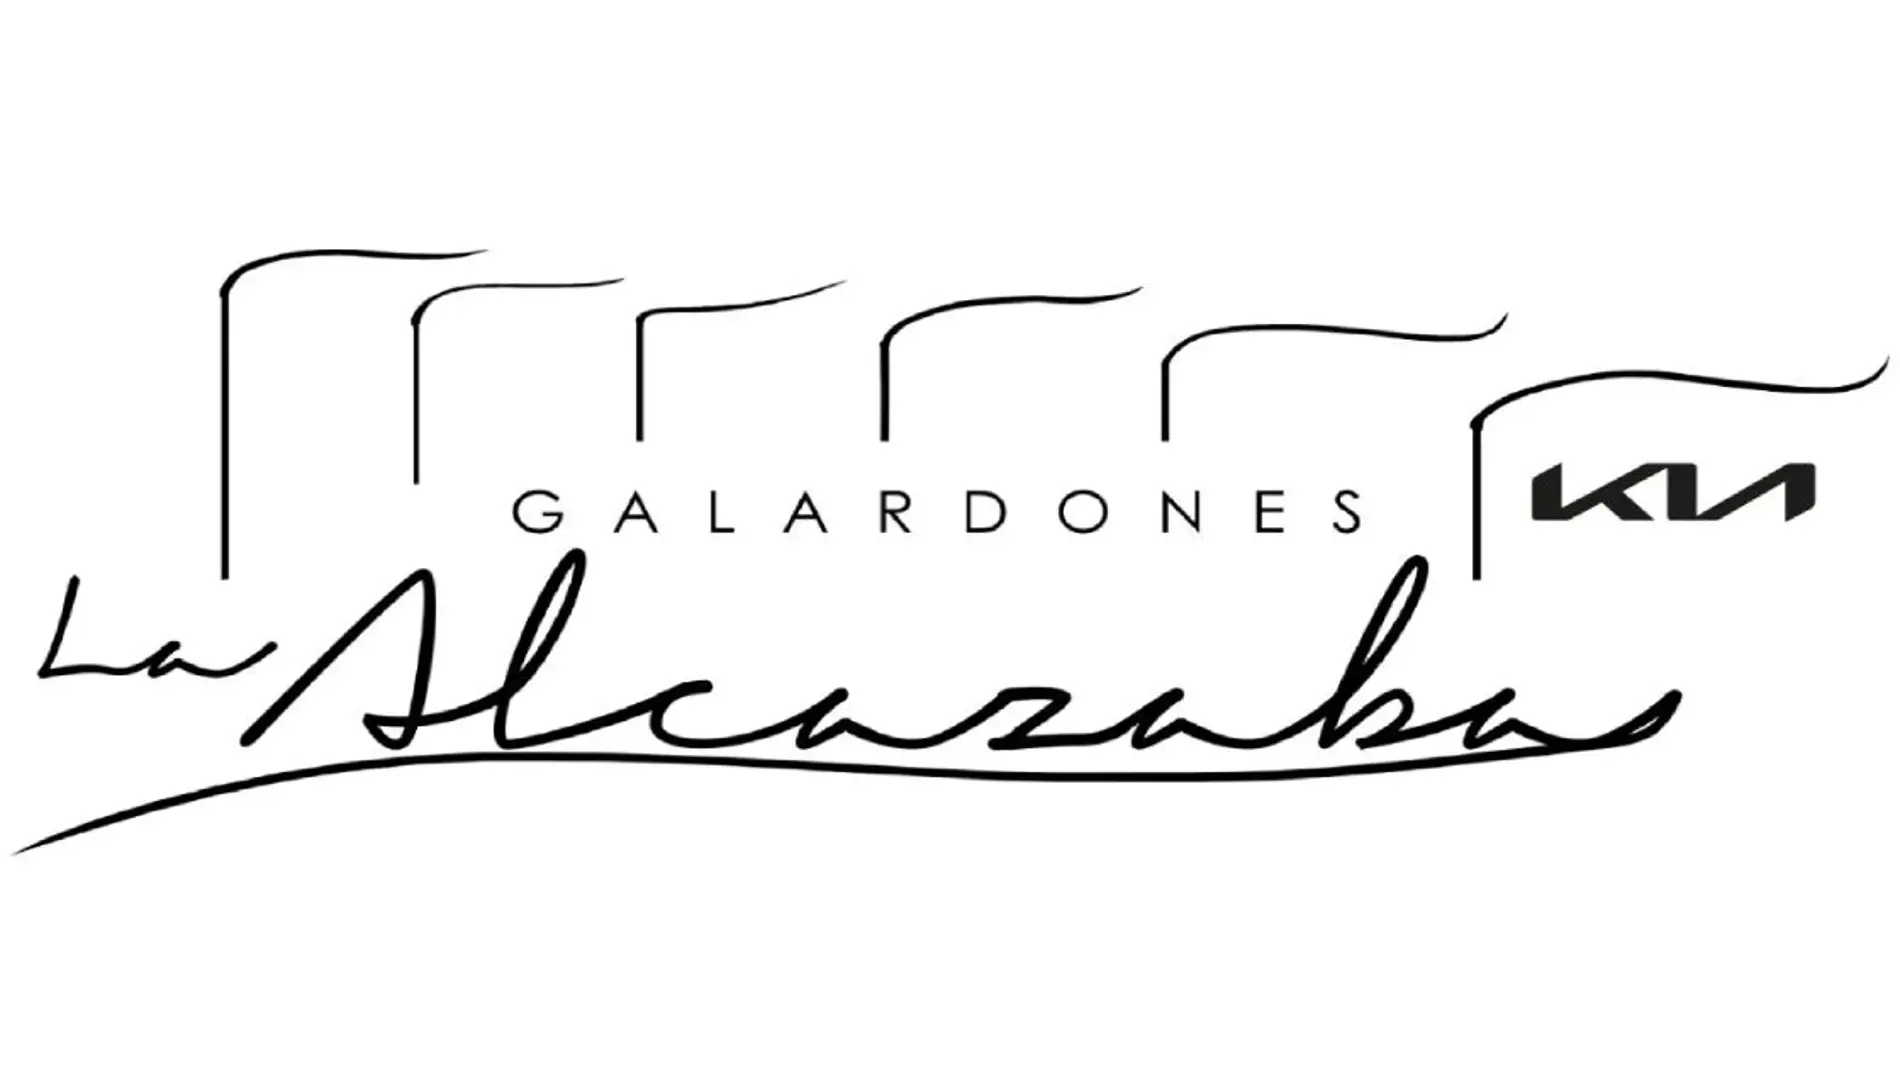 Galardones La Alcazaba